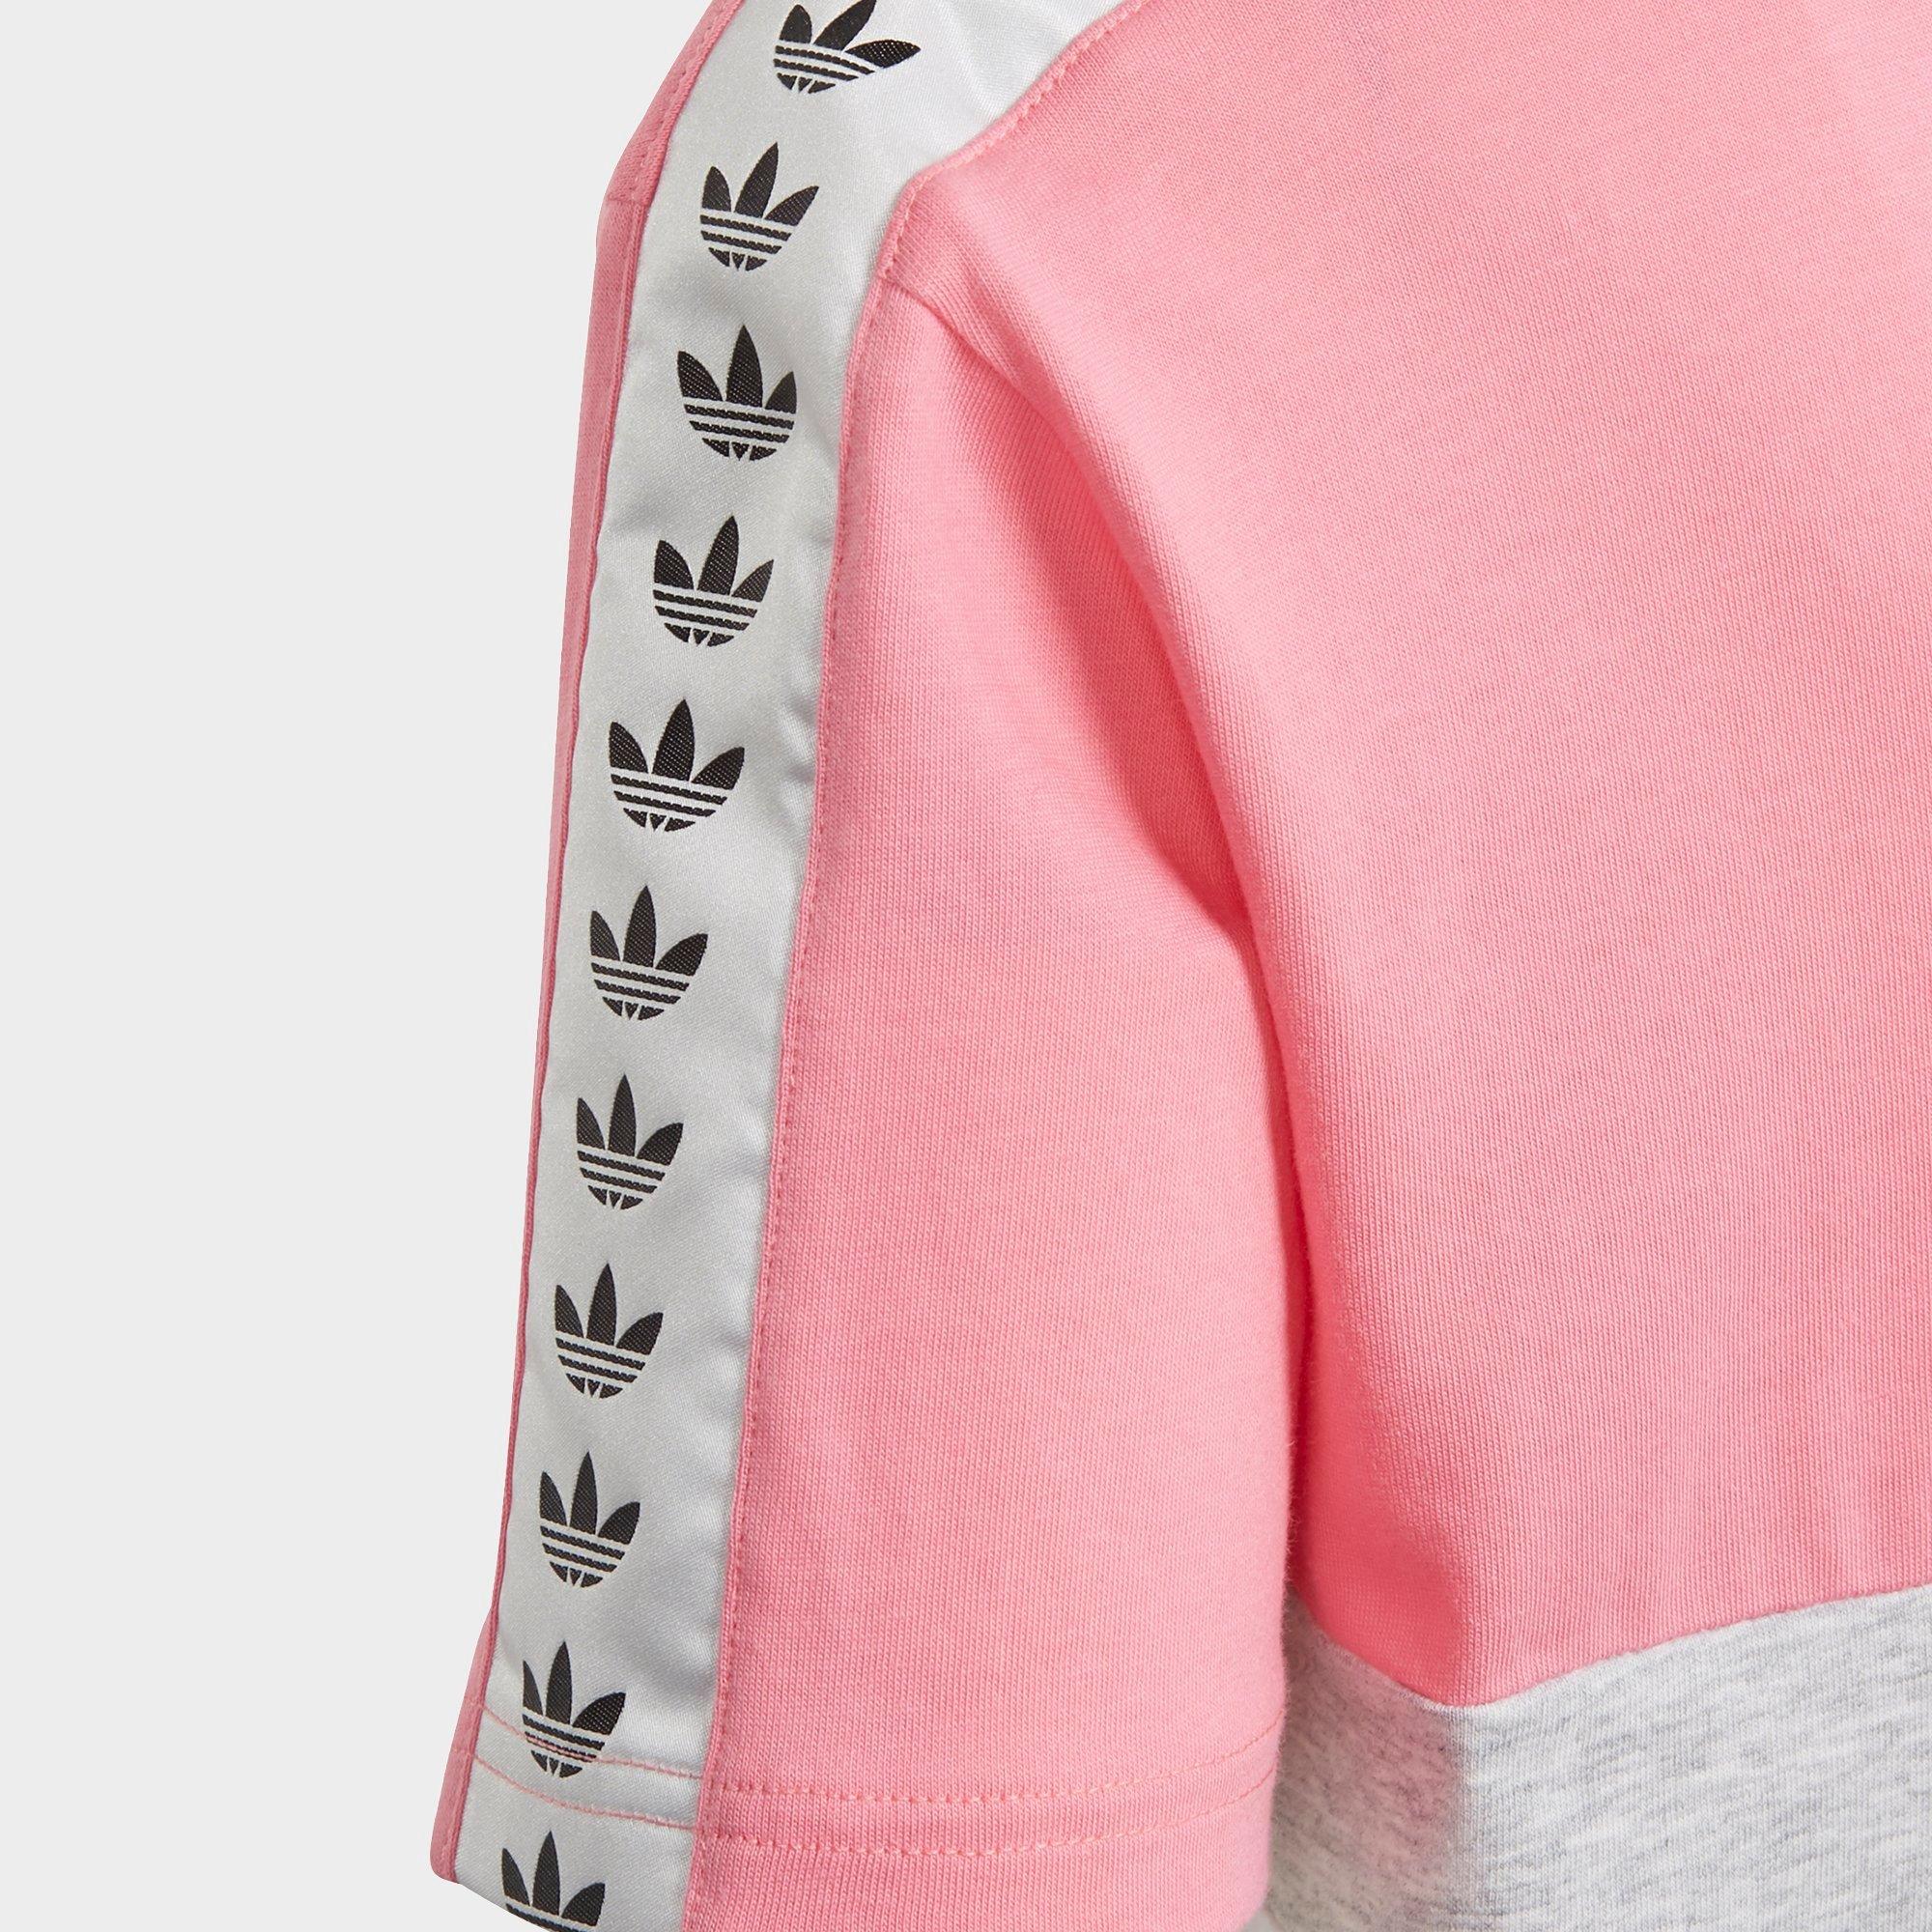 adidas pink tape sweatshirt